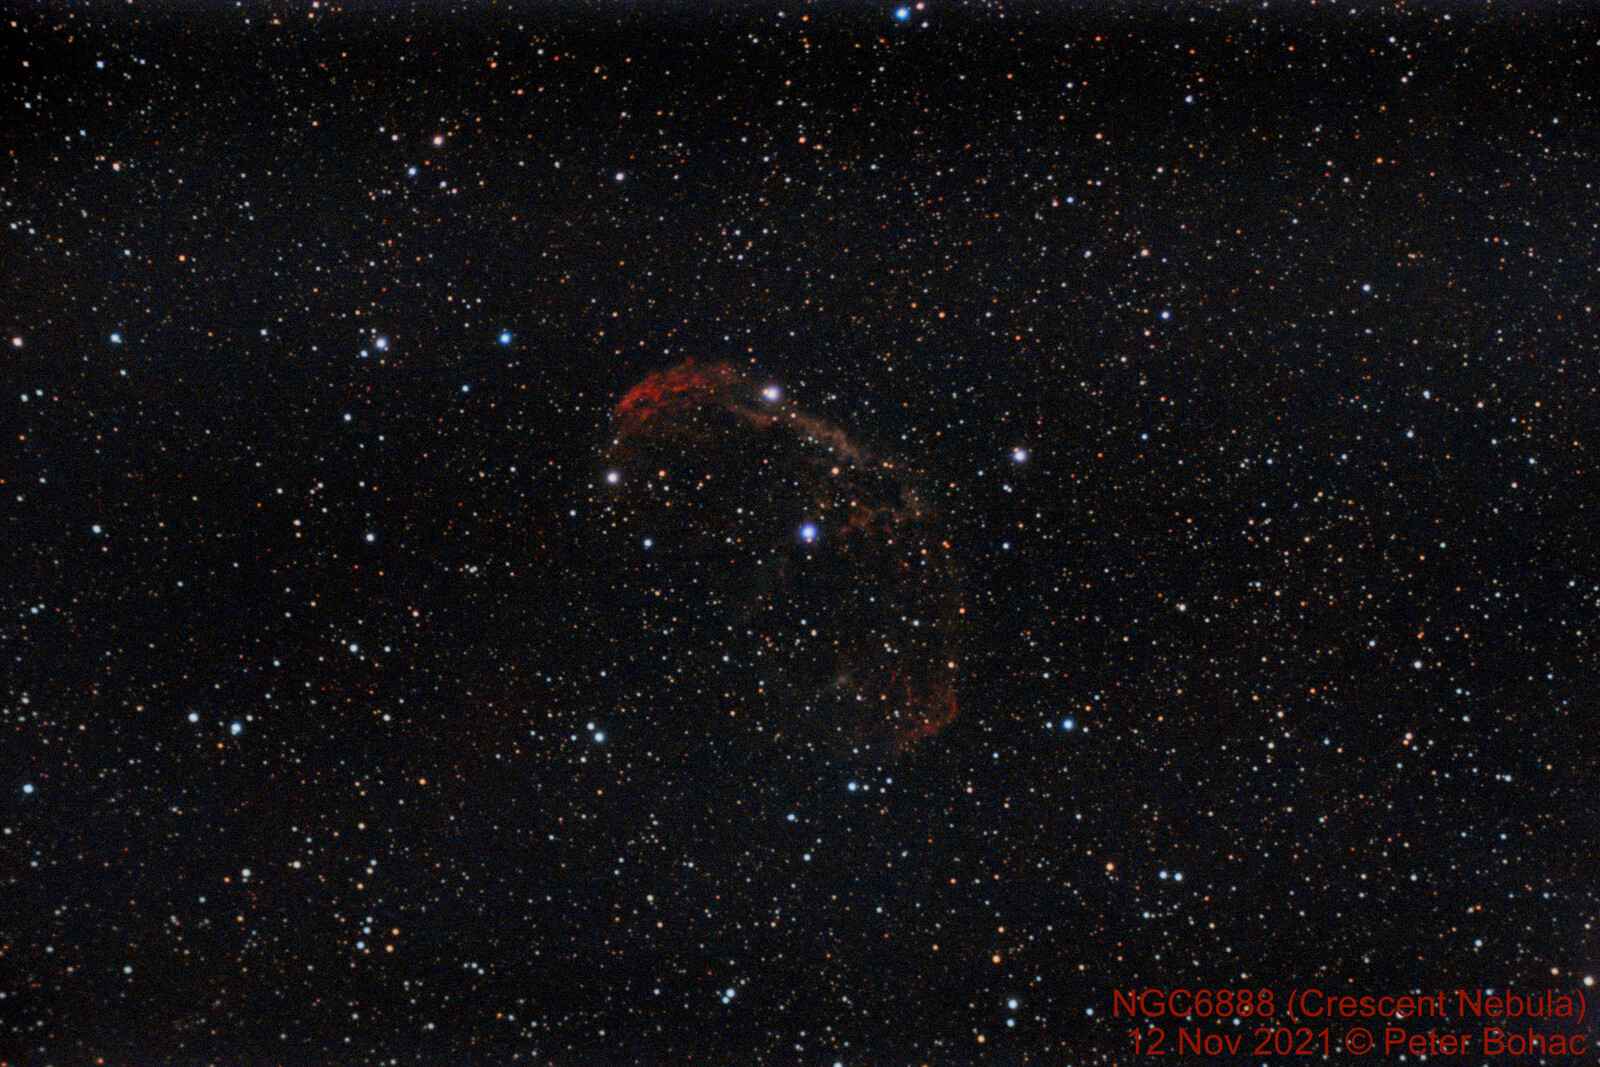 Cresent Nebula (NGC6888) - SiriL processed